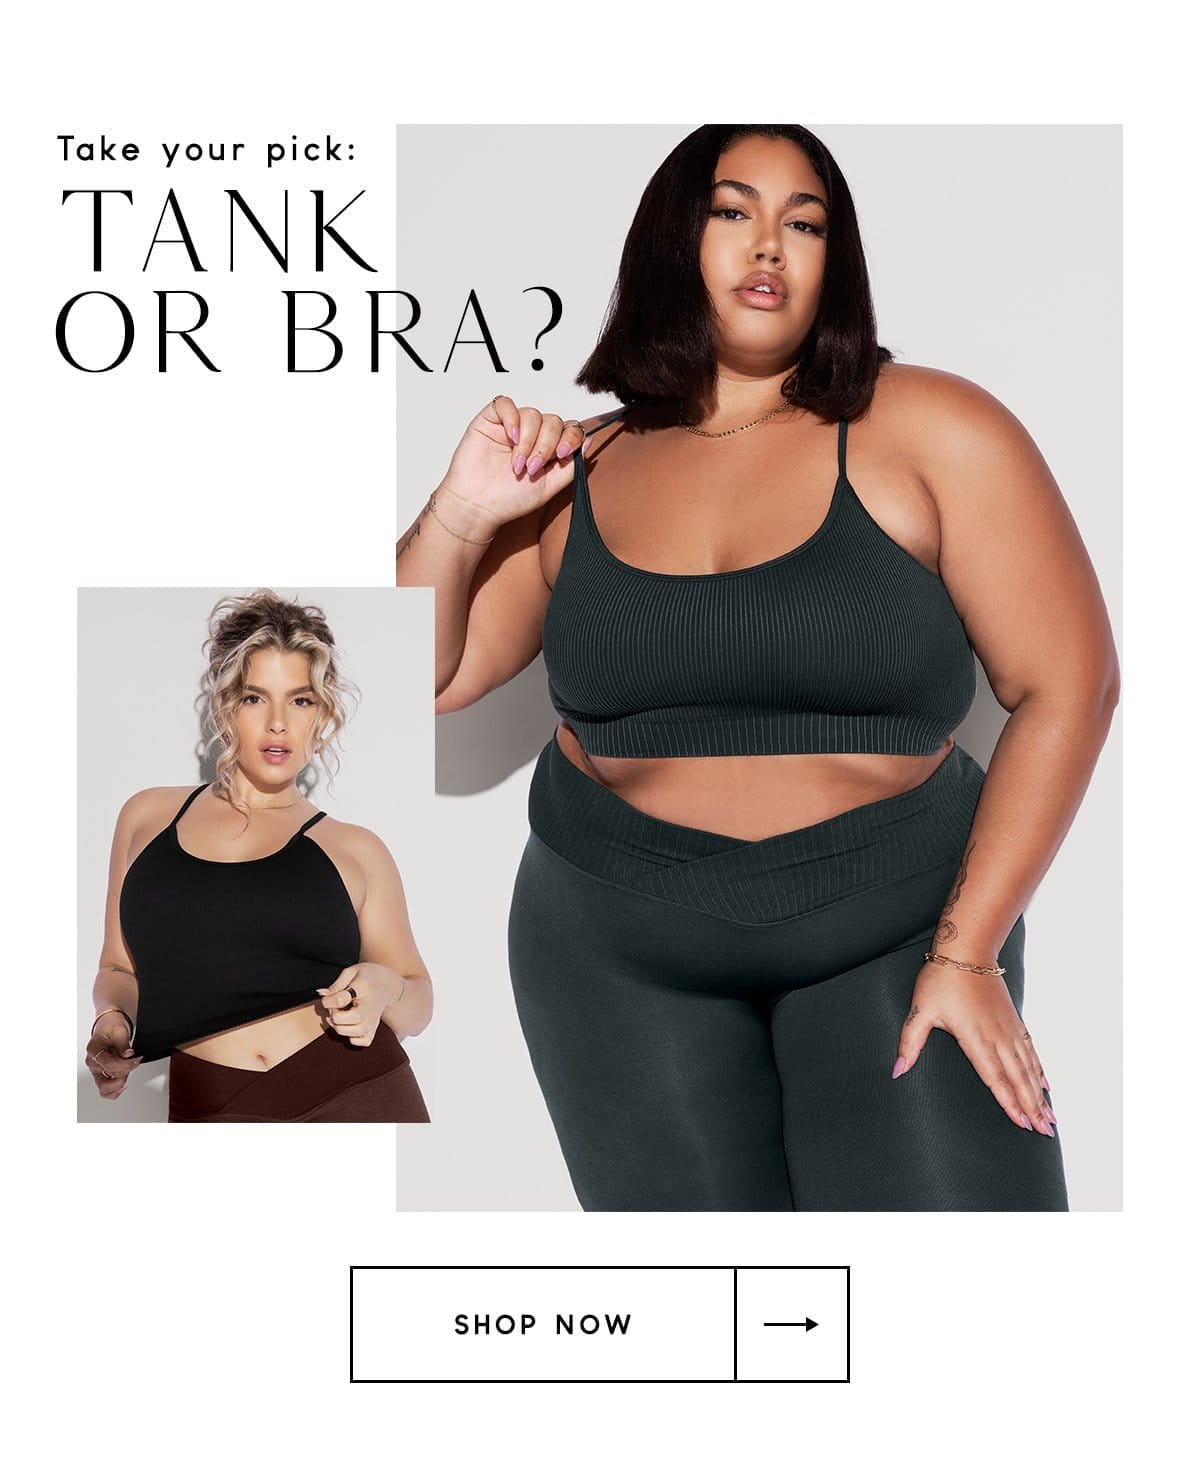 Tank or bra?